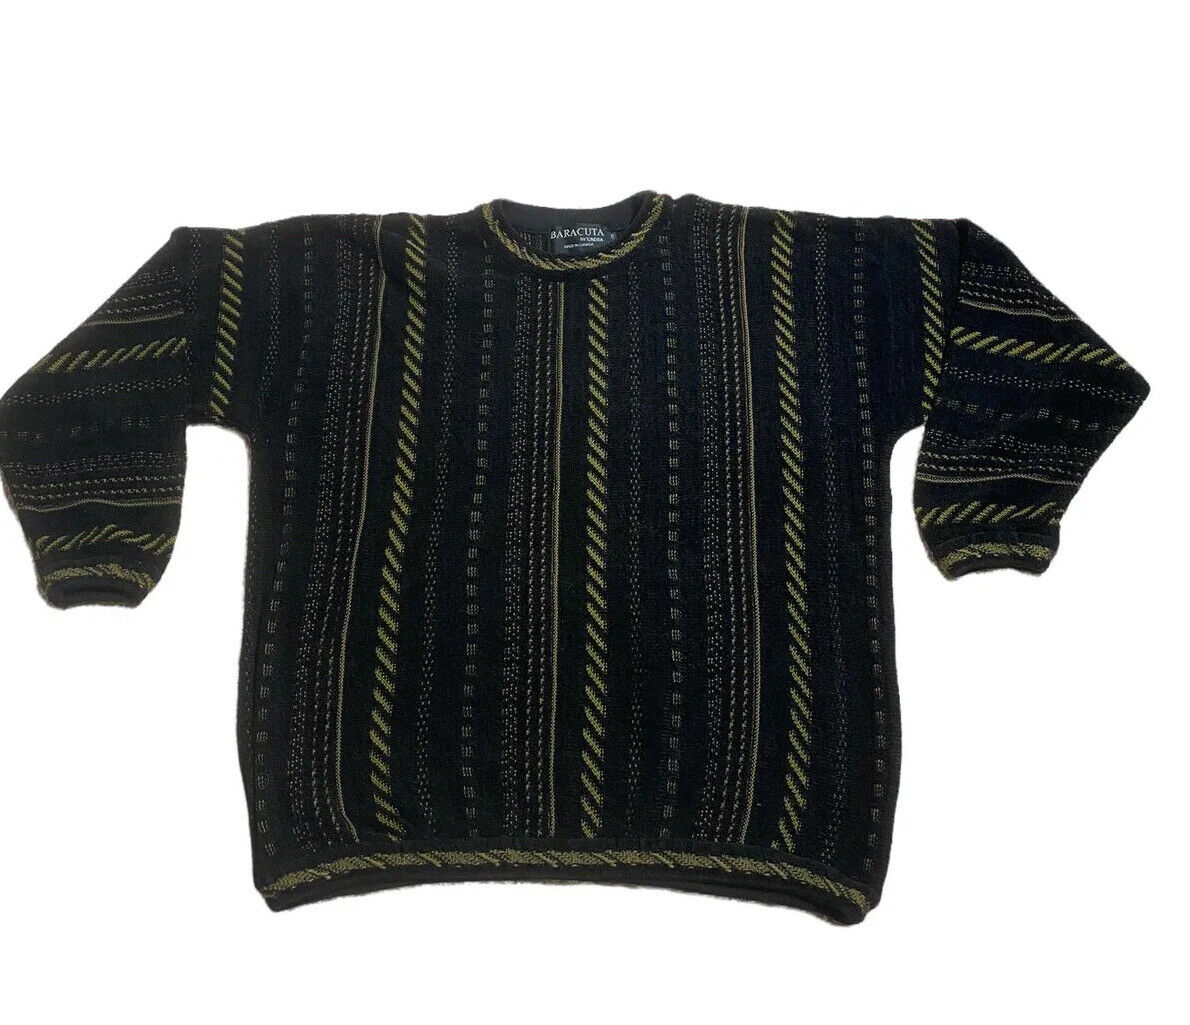 BARACUTA by TUNDRA / CANADA - Mens XL/TG Textured Vintage Sweater